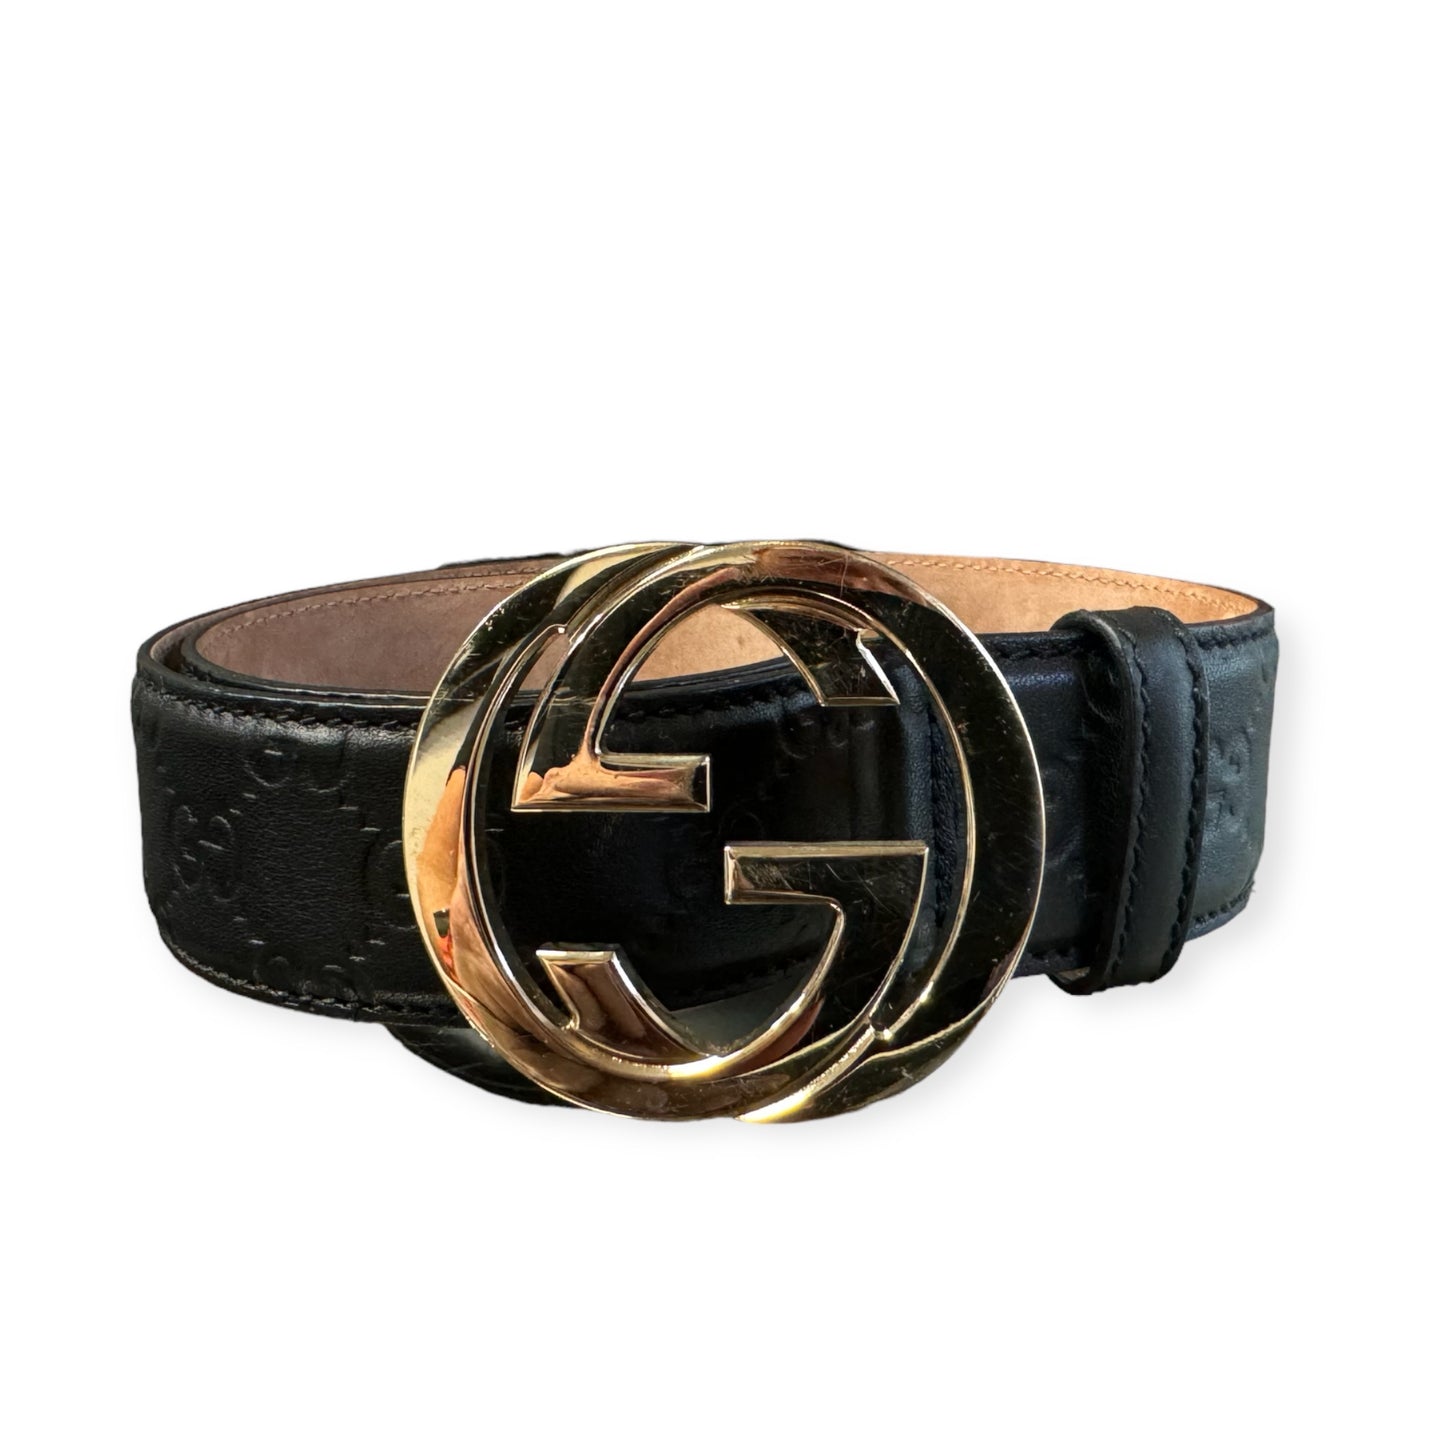 Gucci GG Supreme Leather Belt Size 30